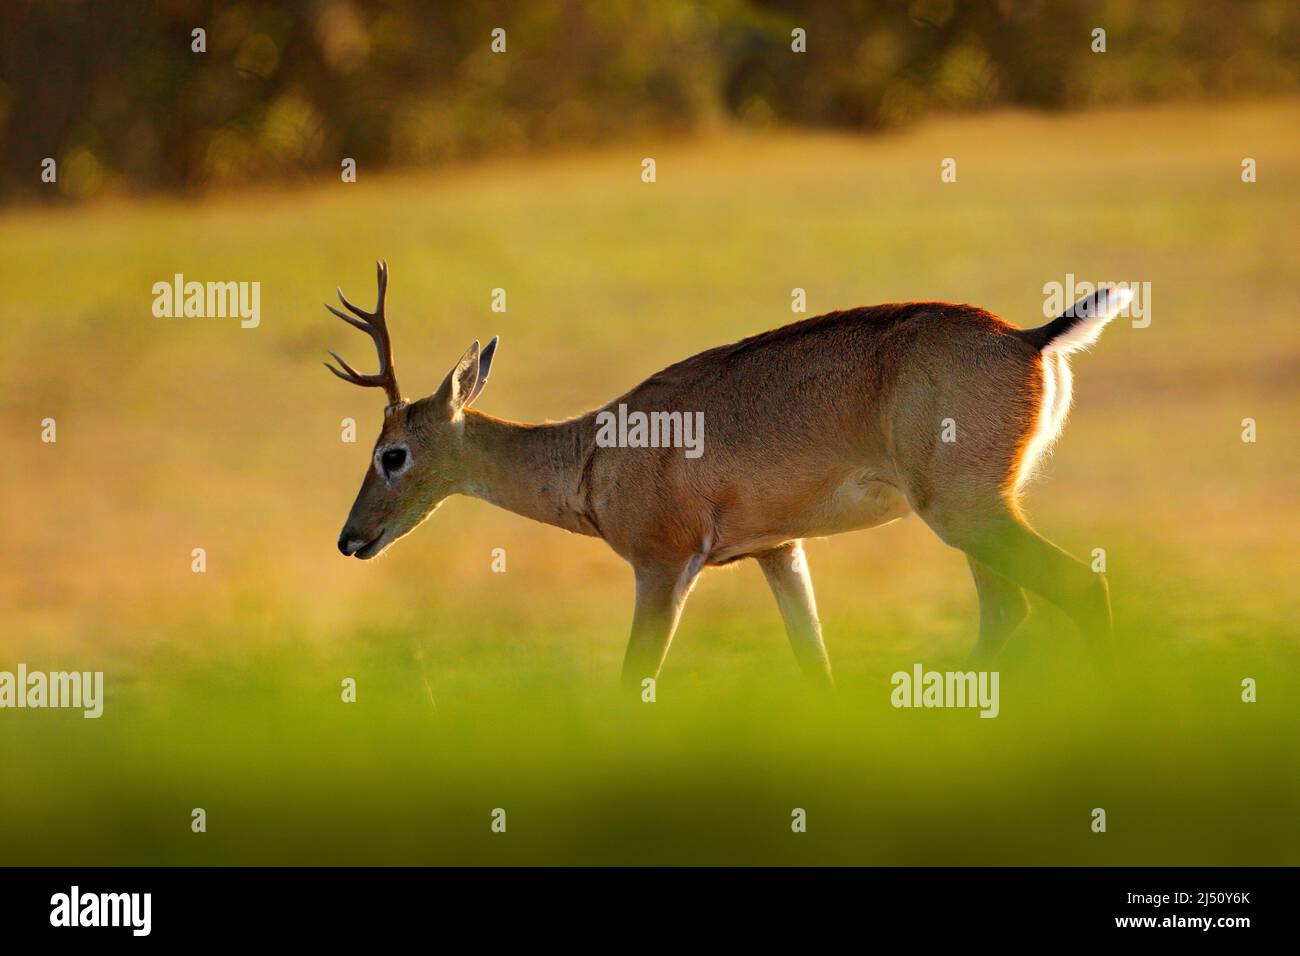 Pampas Deer, Ozotoceros bezoarticus, seduto in erba verde, Pantanal, Brasile. Scena della fauna selvatica dalla natura. Cervi, habitat naturale. Fauna selvatica Brasile. Foto Stock